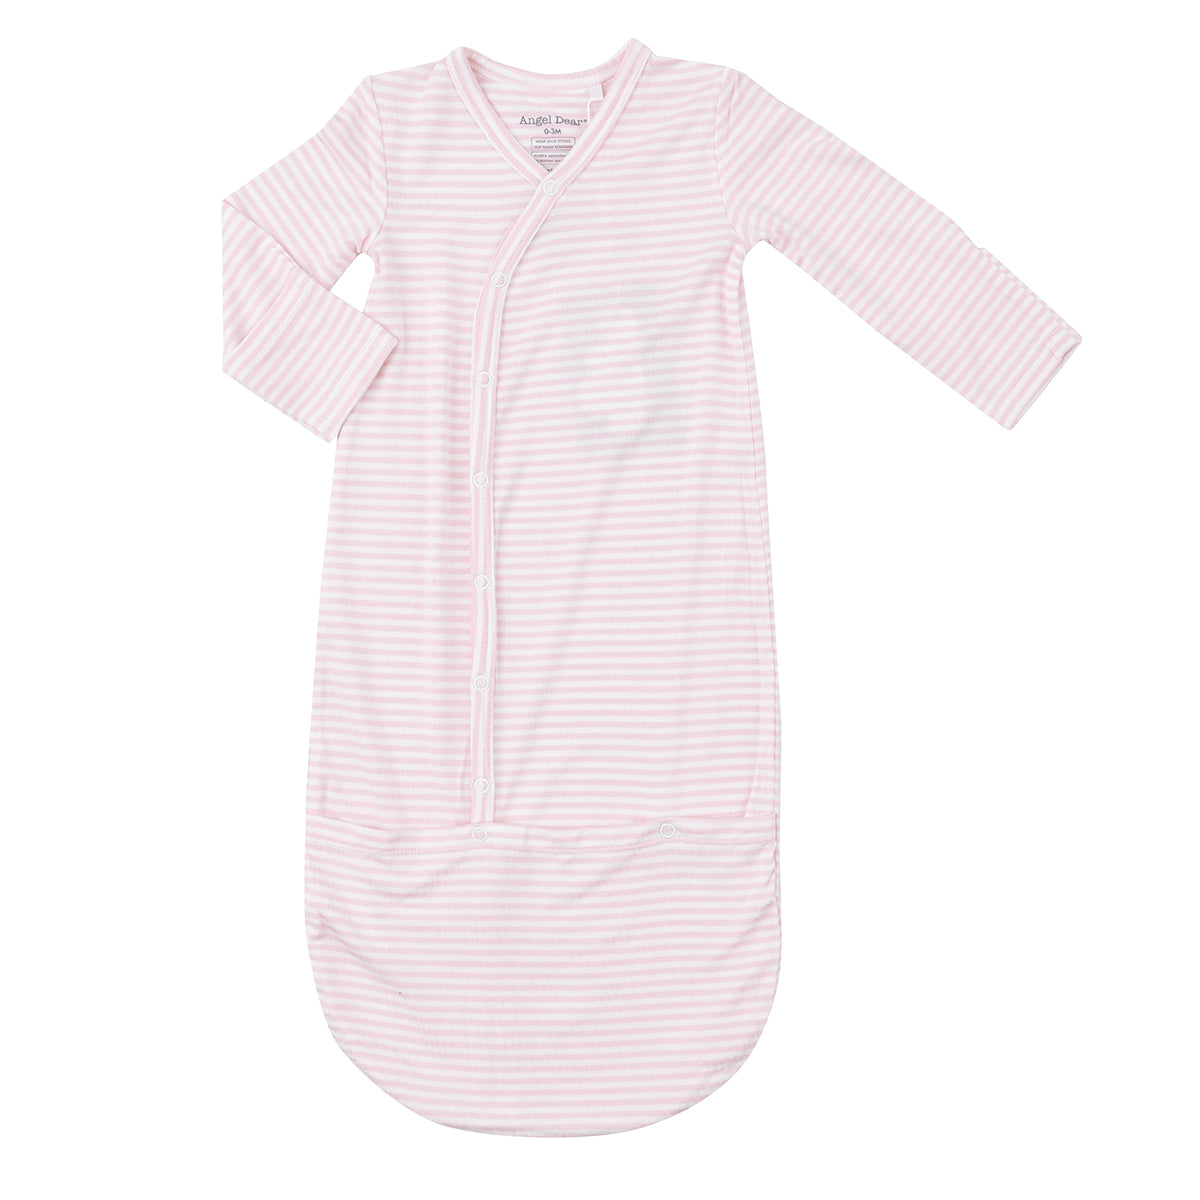 Angel Dear Baby Girl's Pink Striped Bundler Gown